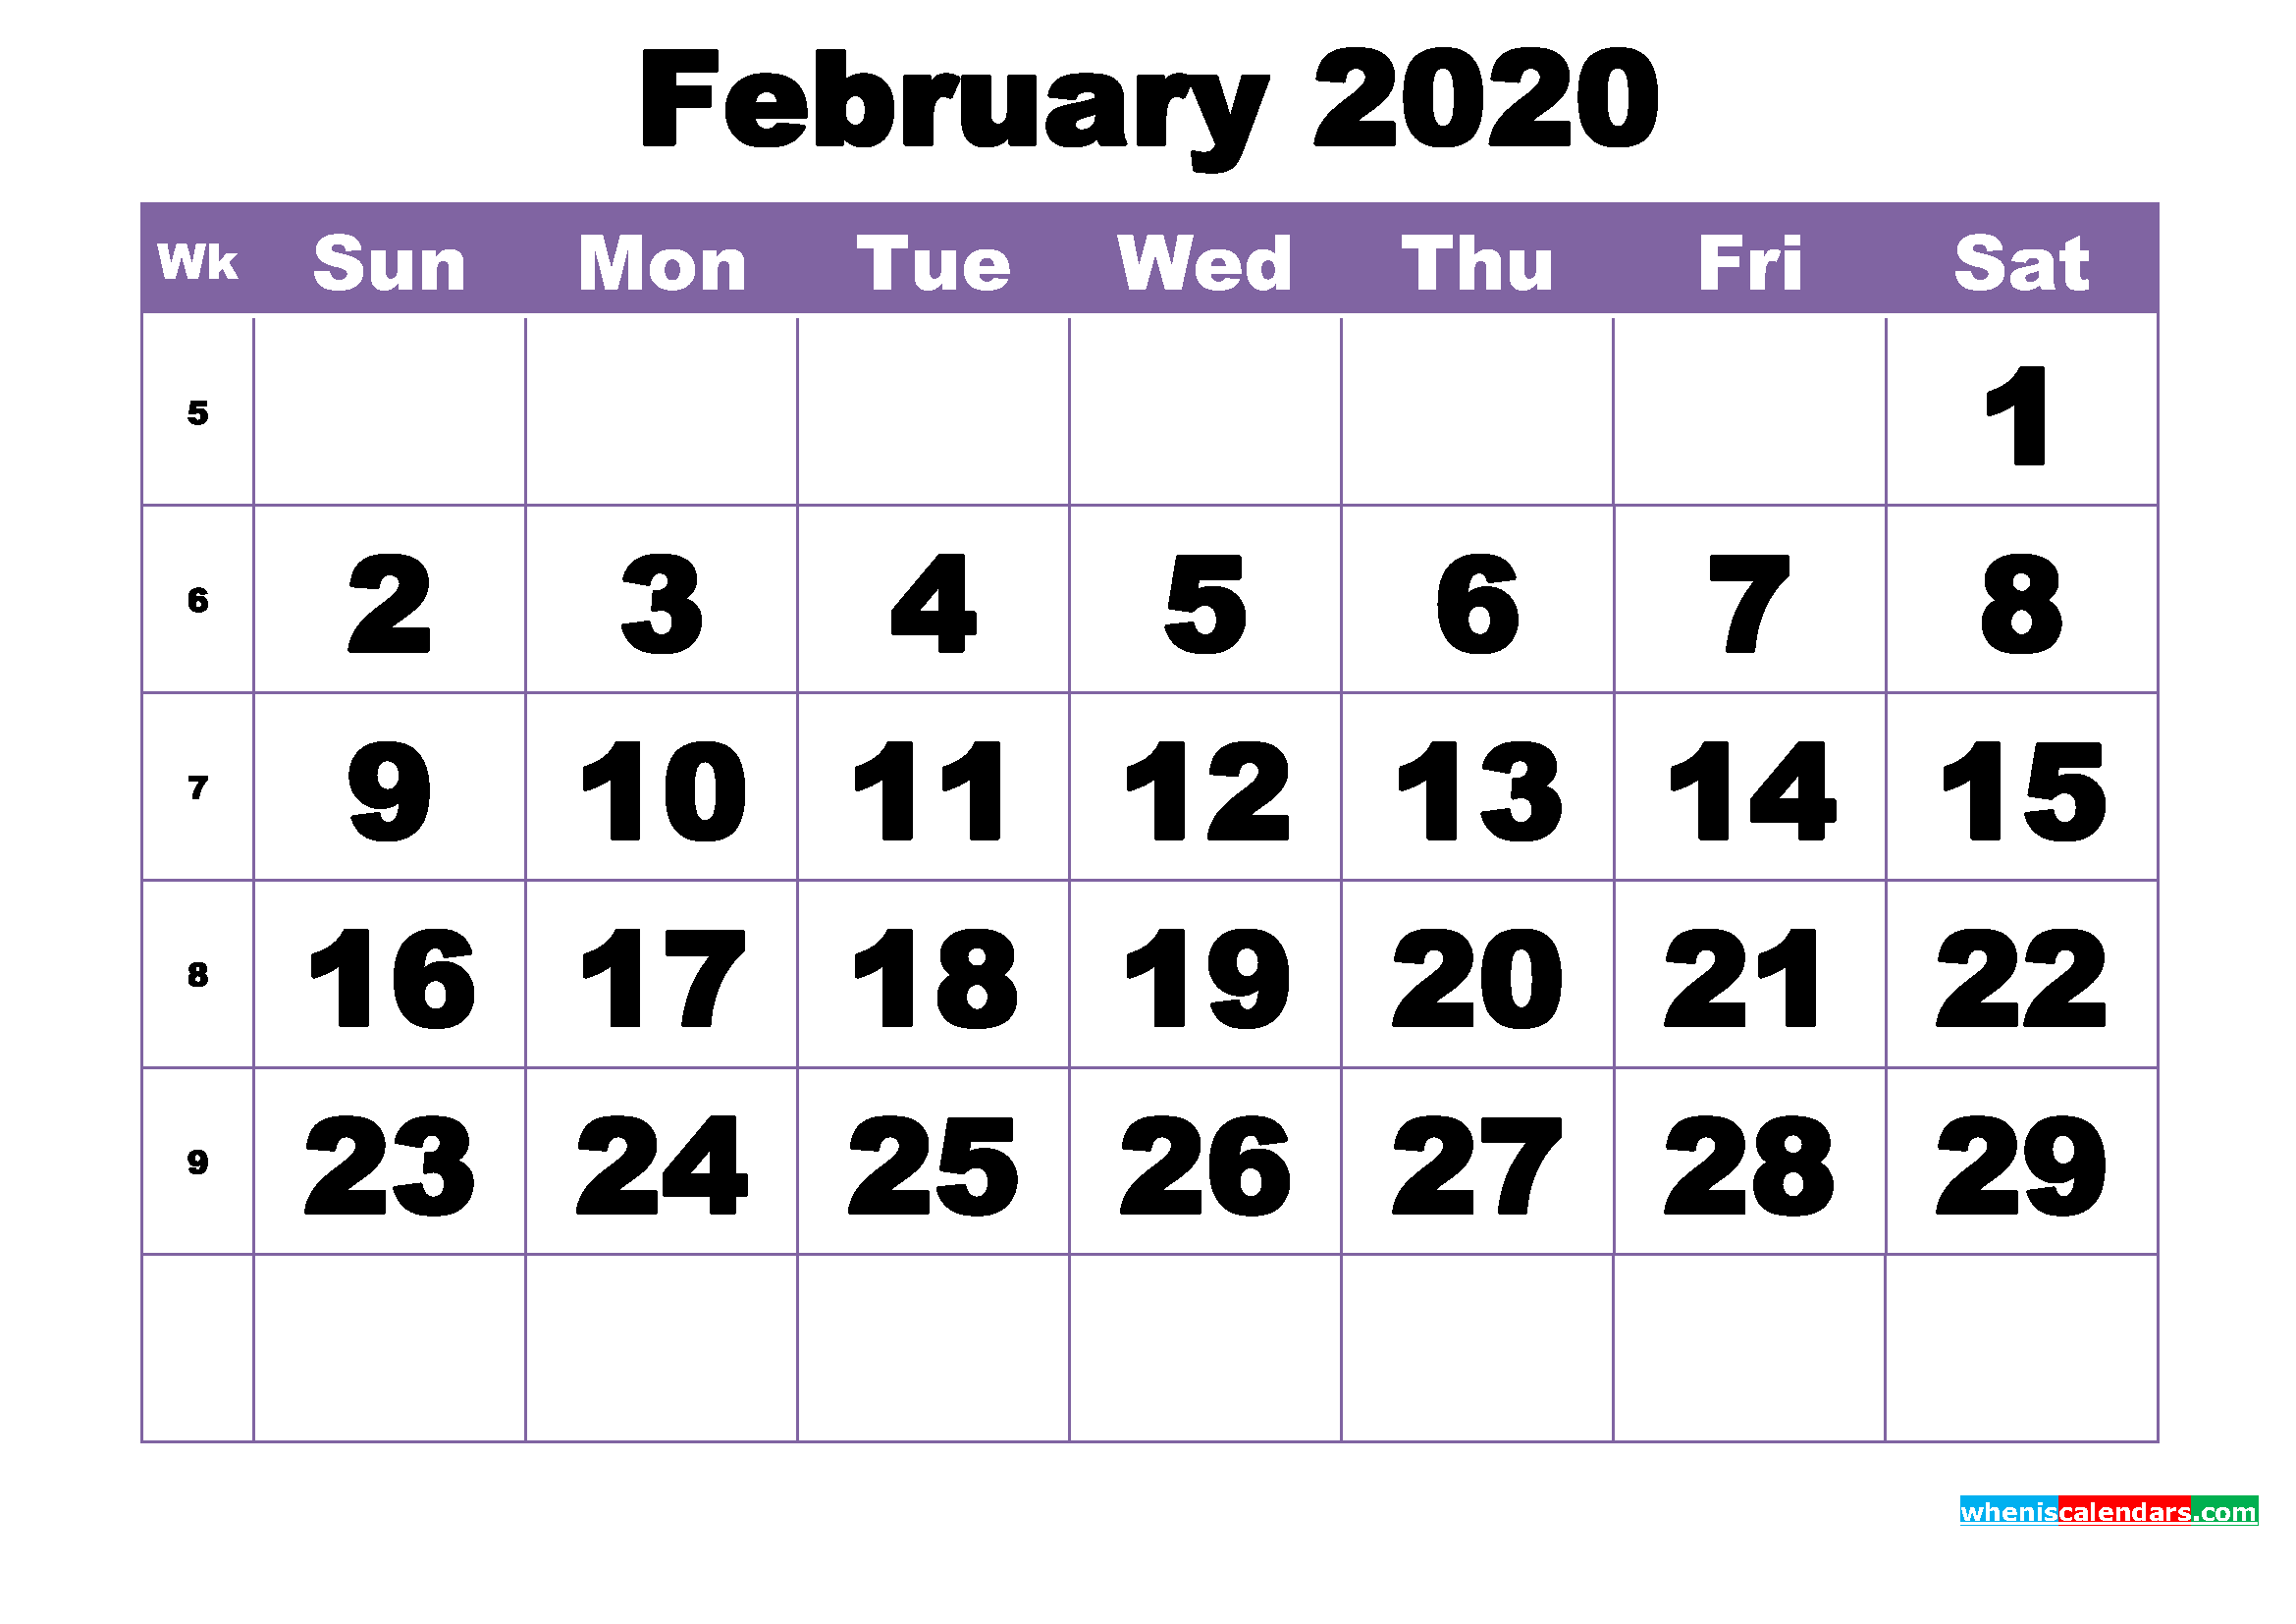 February 2020 Printable Calendar Template